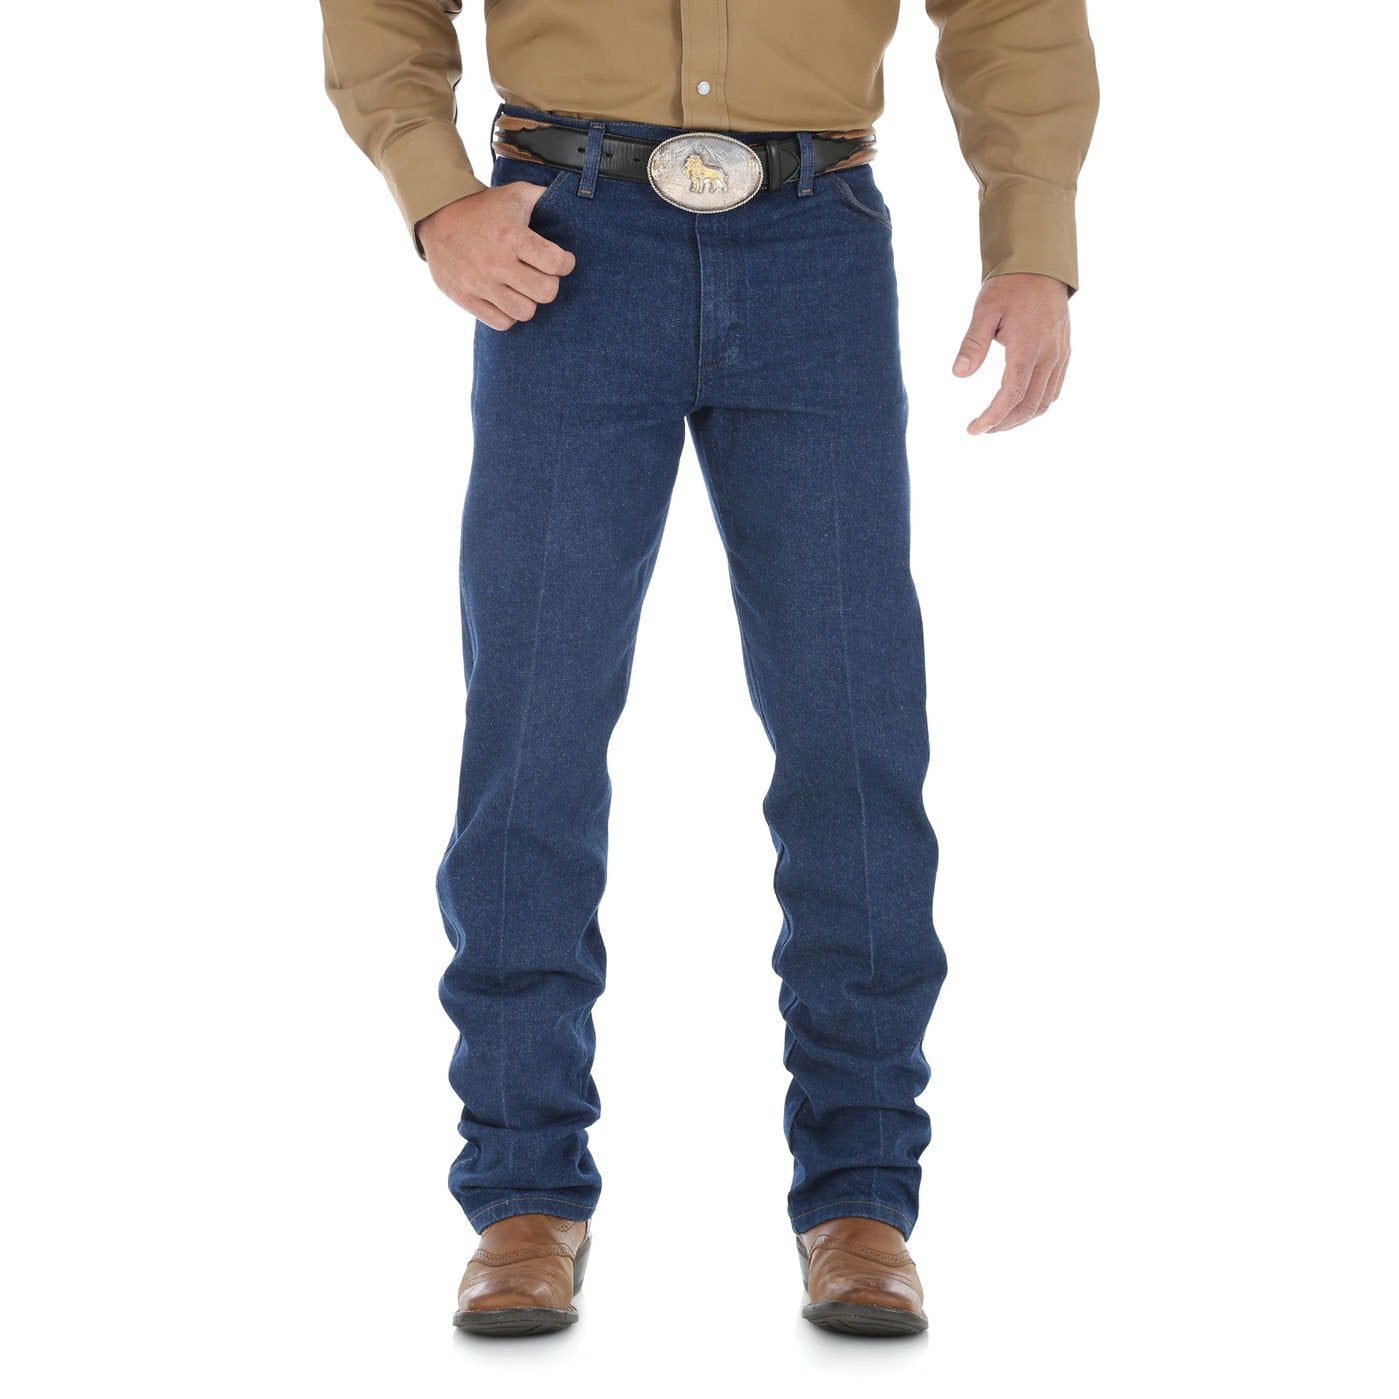 Wrangler Mens Jeans | Cowboy Cut Original | 13MWZPW | 36 Leg